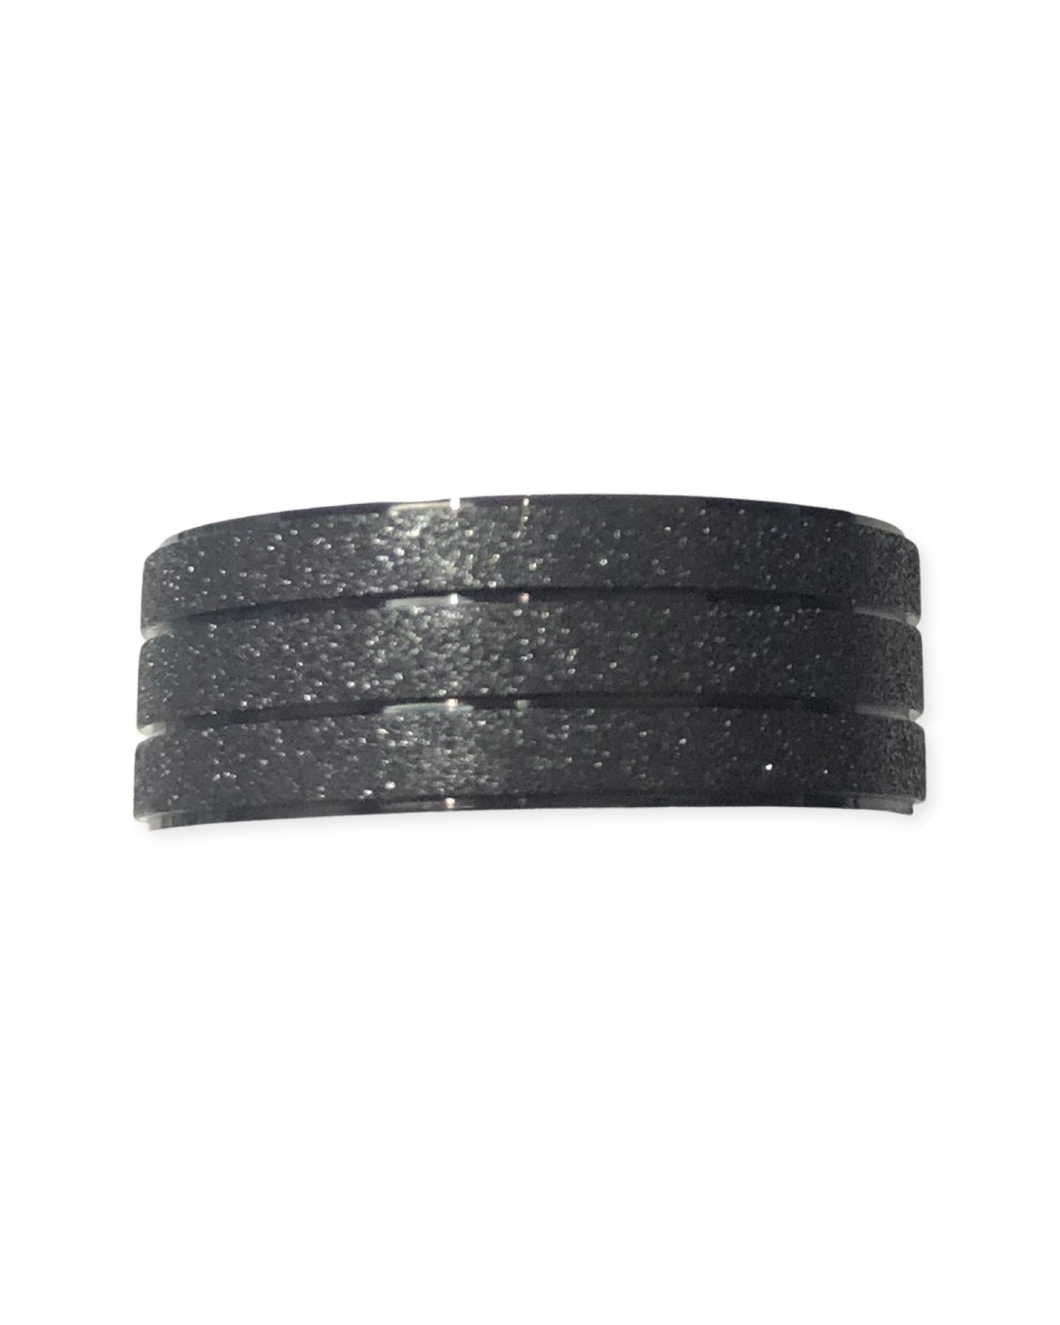 Black Glitter Stainless Silver ring sizes 7, 10, 14  (ST60)